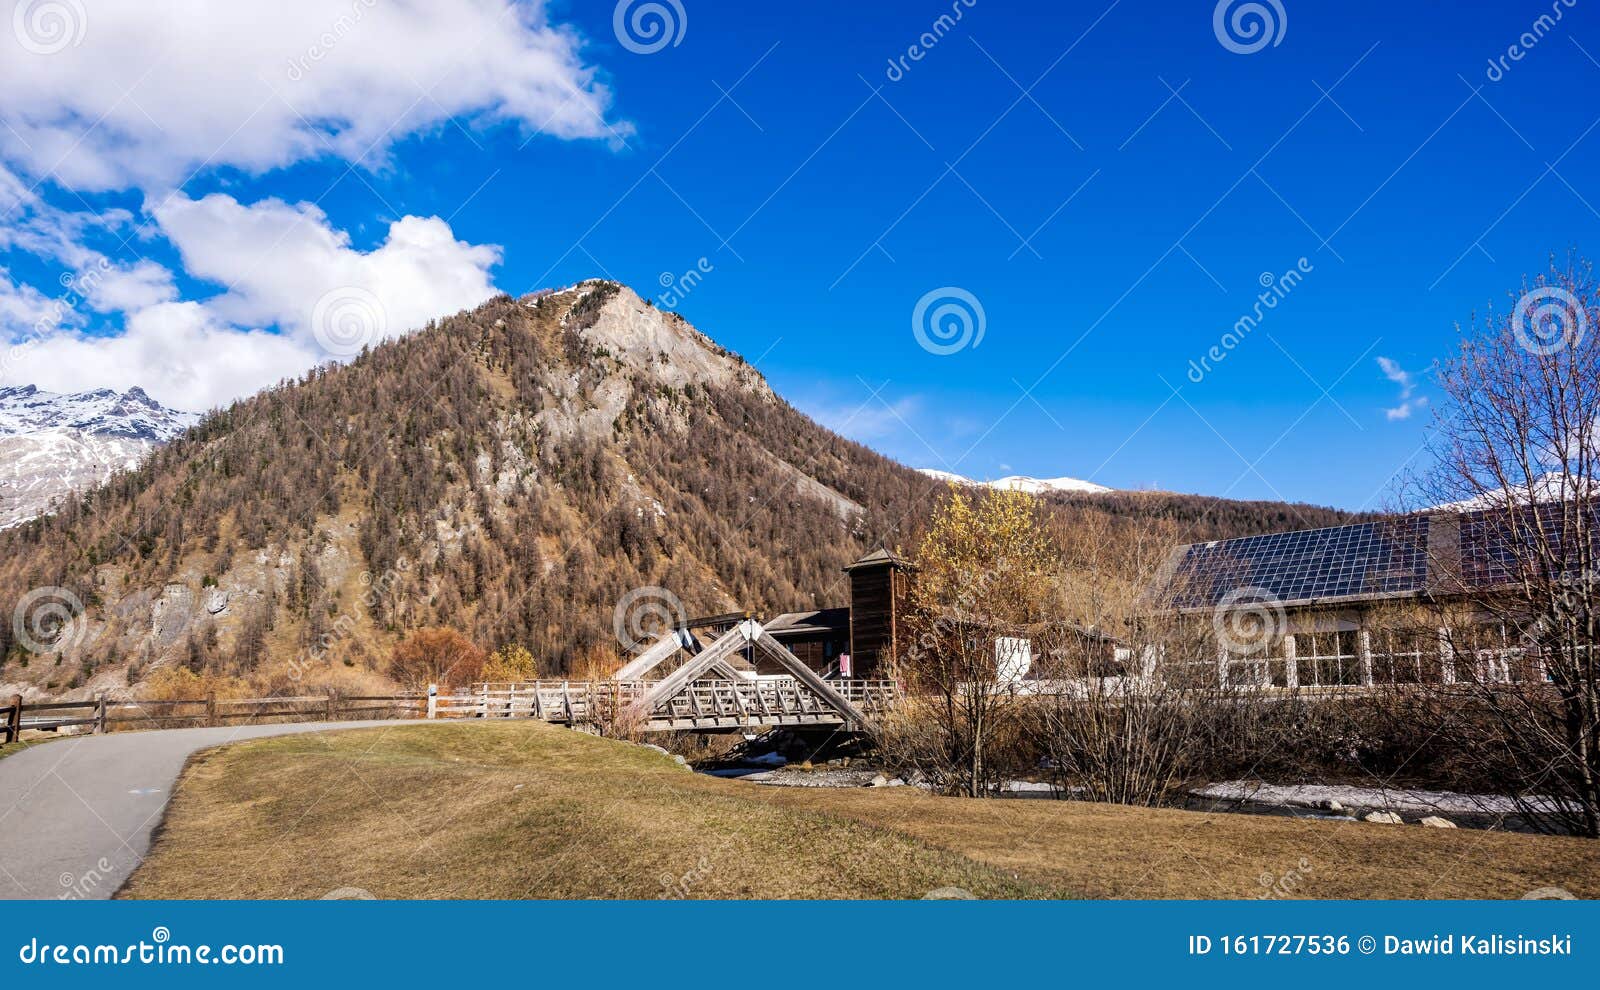 https://thumbs.dreamstime.com/z/mountain-valley-stream-wooden-bridge-livingo-italy-alps-beautiful-trees-footpath-livigno-small-town-ski-centre-161727536.jpg